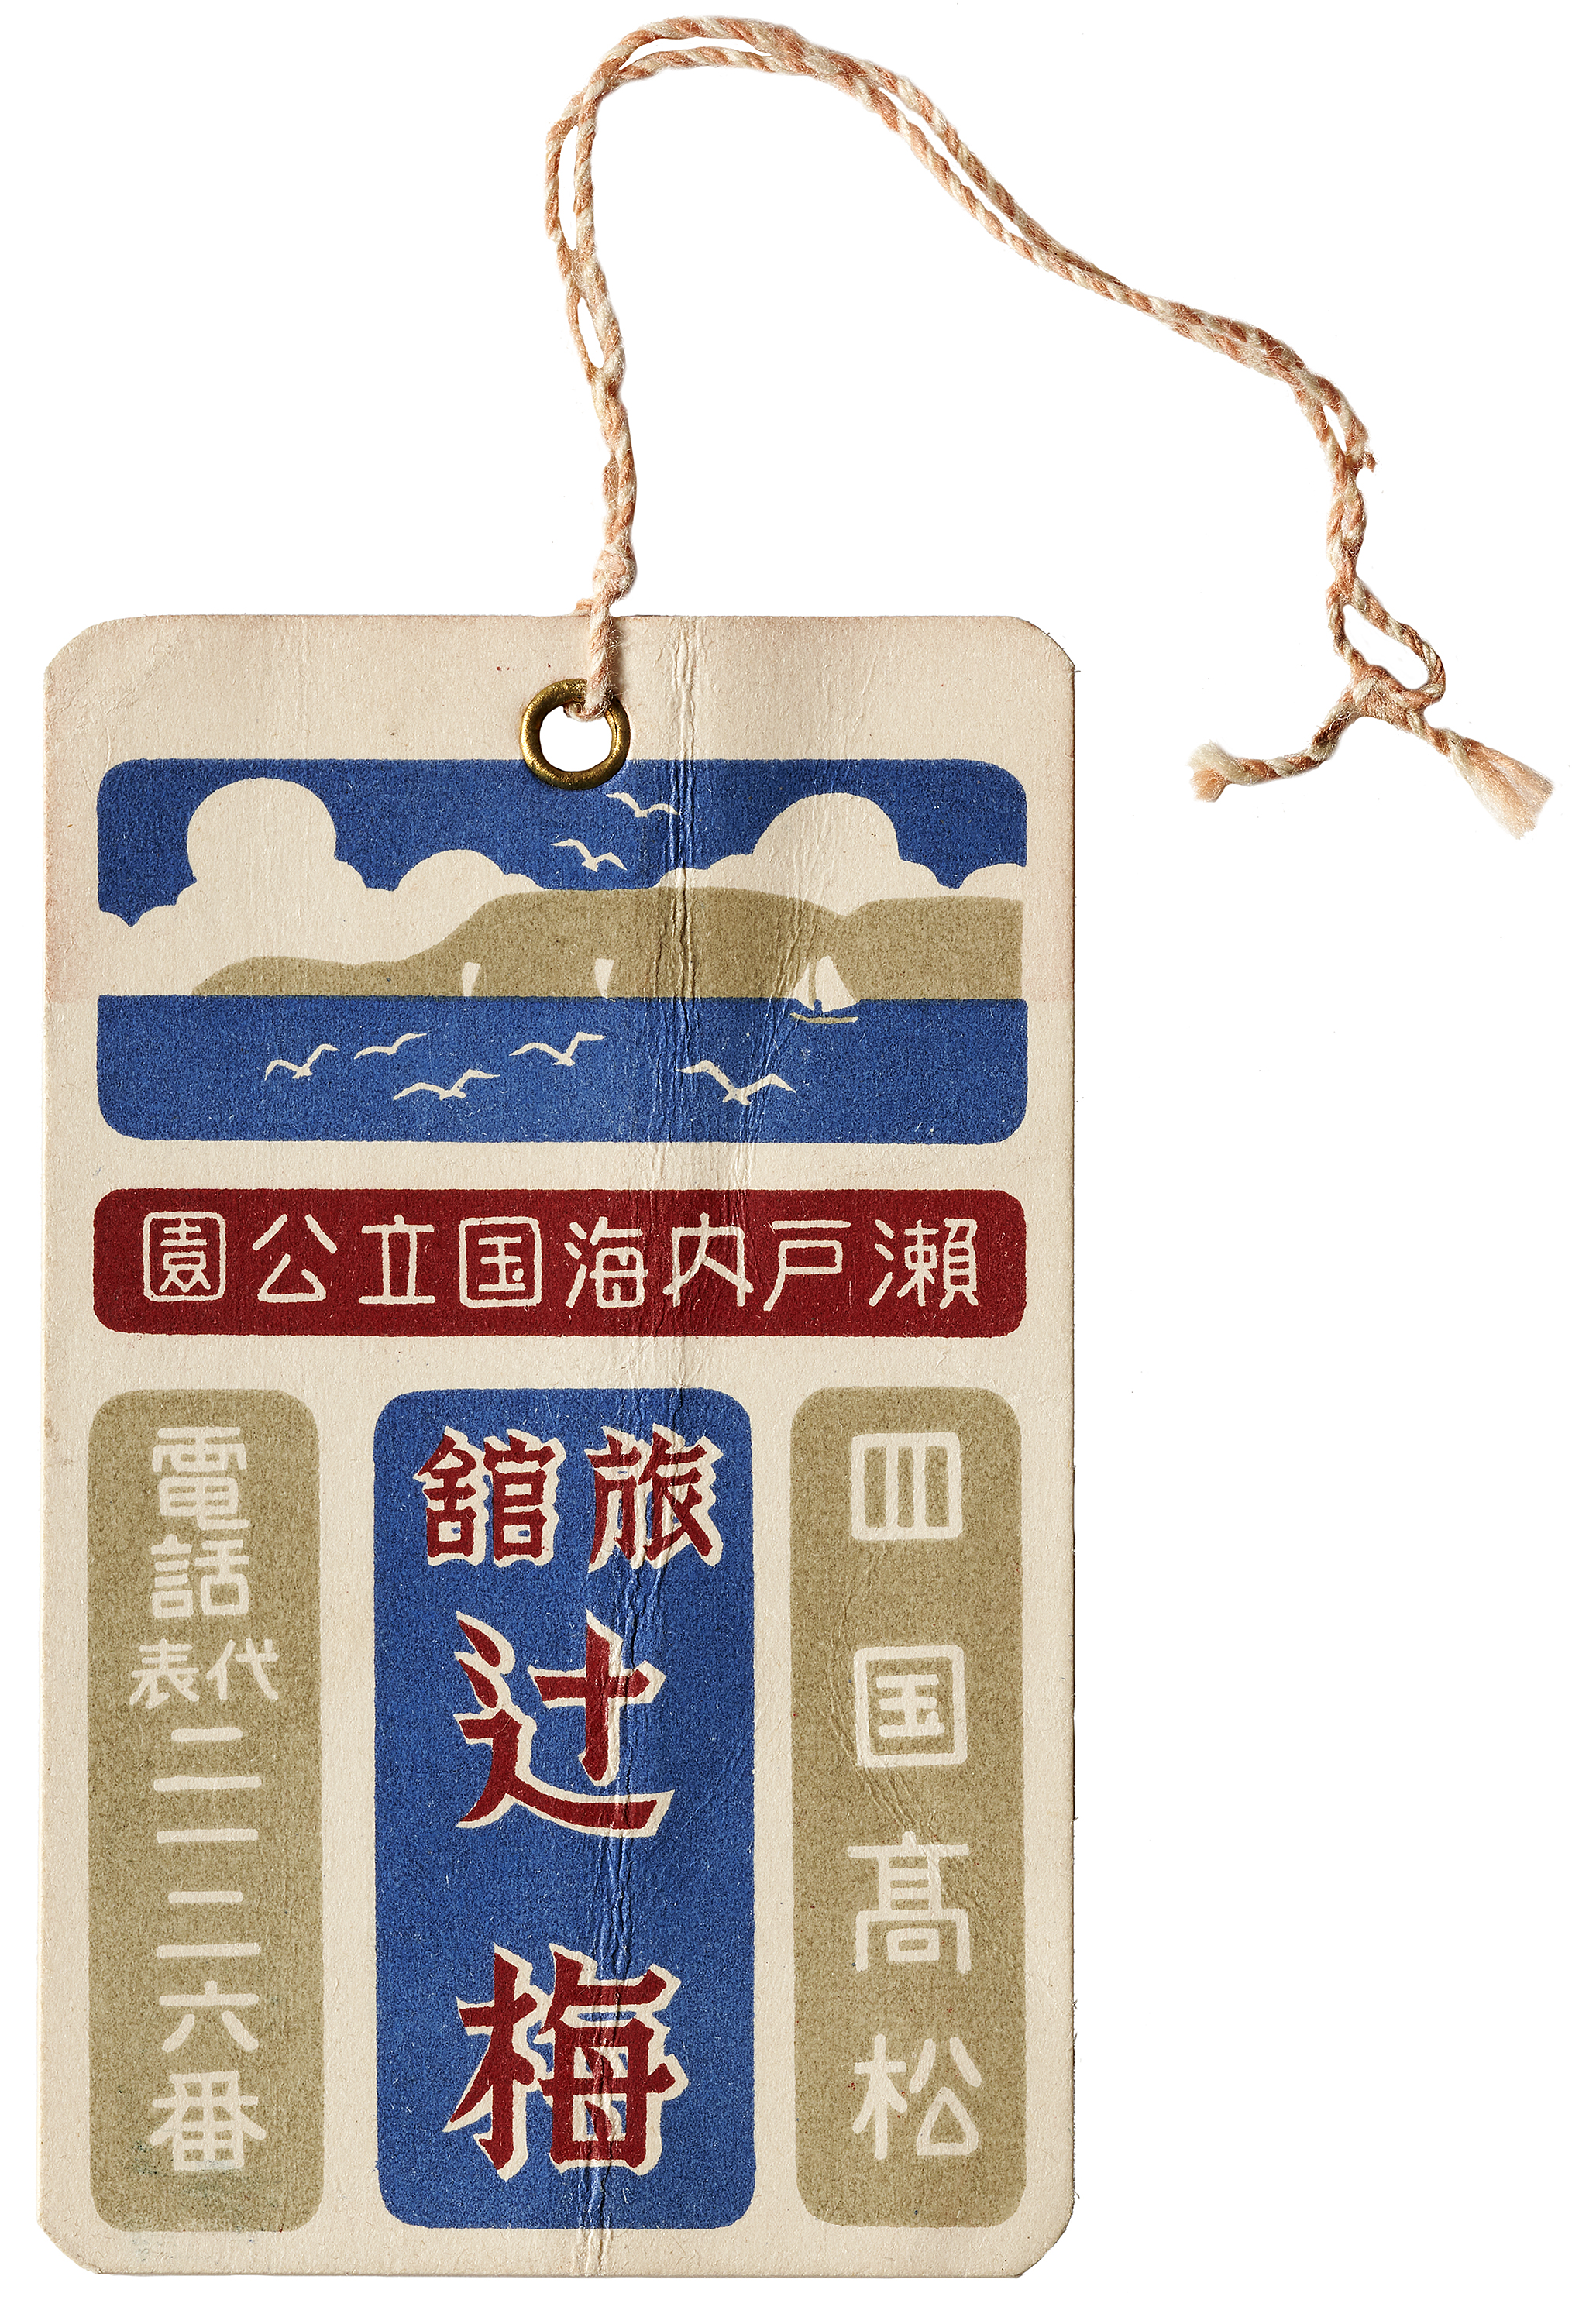 Luggage label for a tour of Setonaikai National Park from Tsujiume Inn, Takamatsu, Shikoku Island, Japan